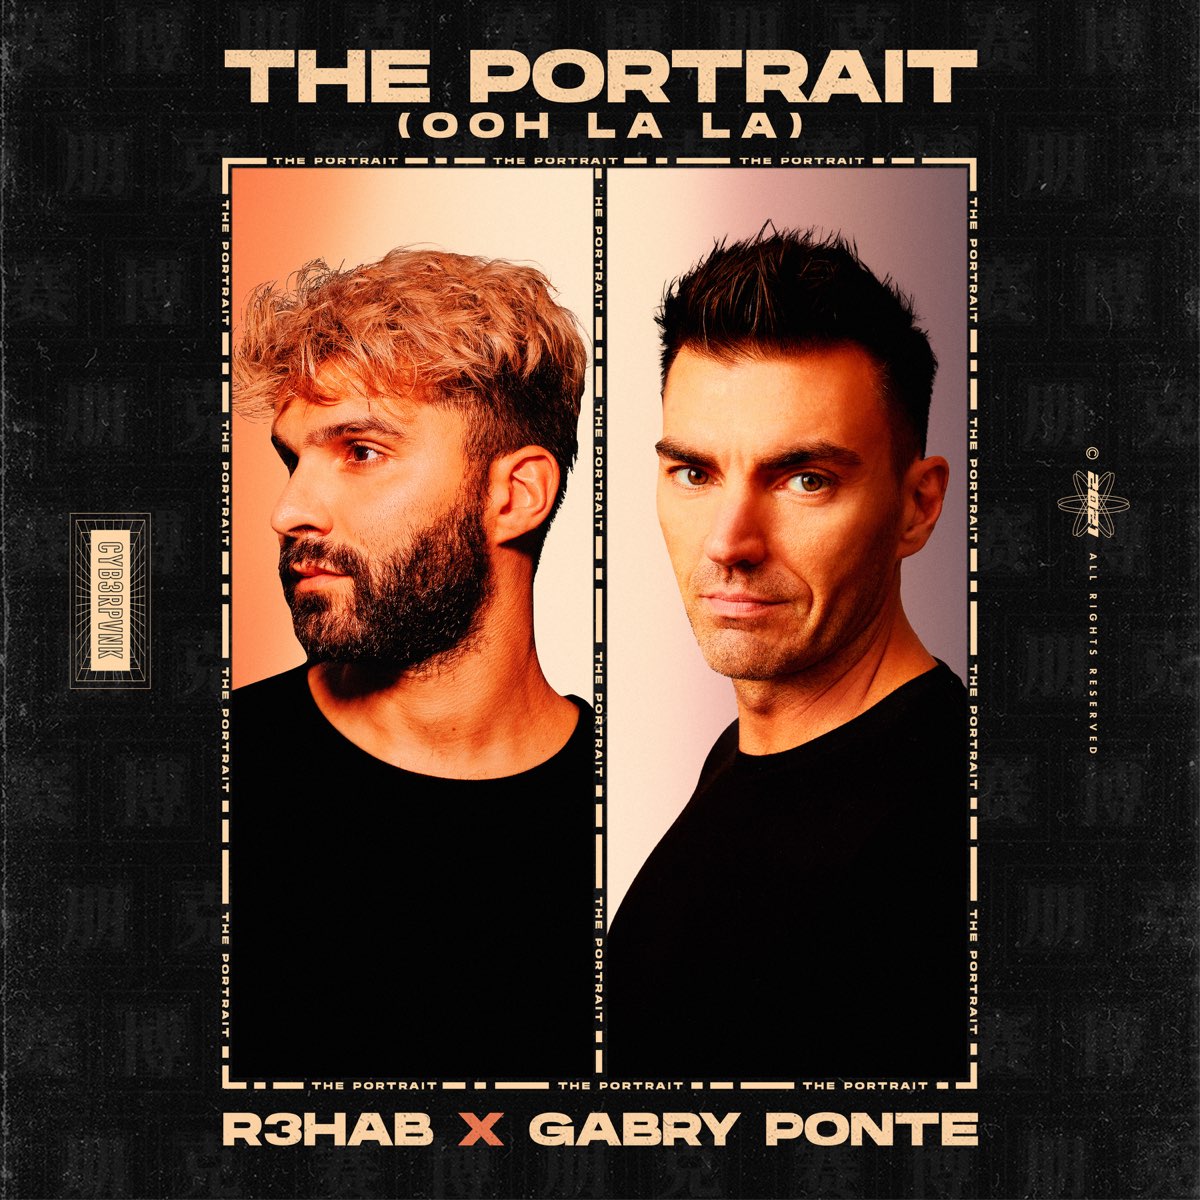 R3HAB & Gabry Ponte The Portrait (Ooh La La) cover artwork